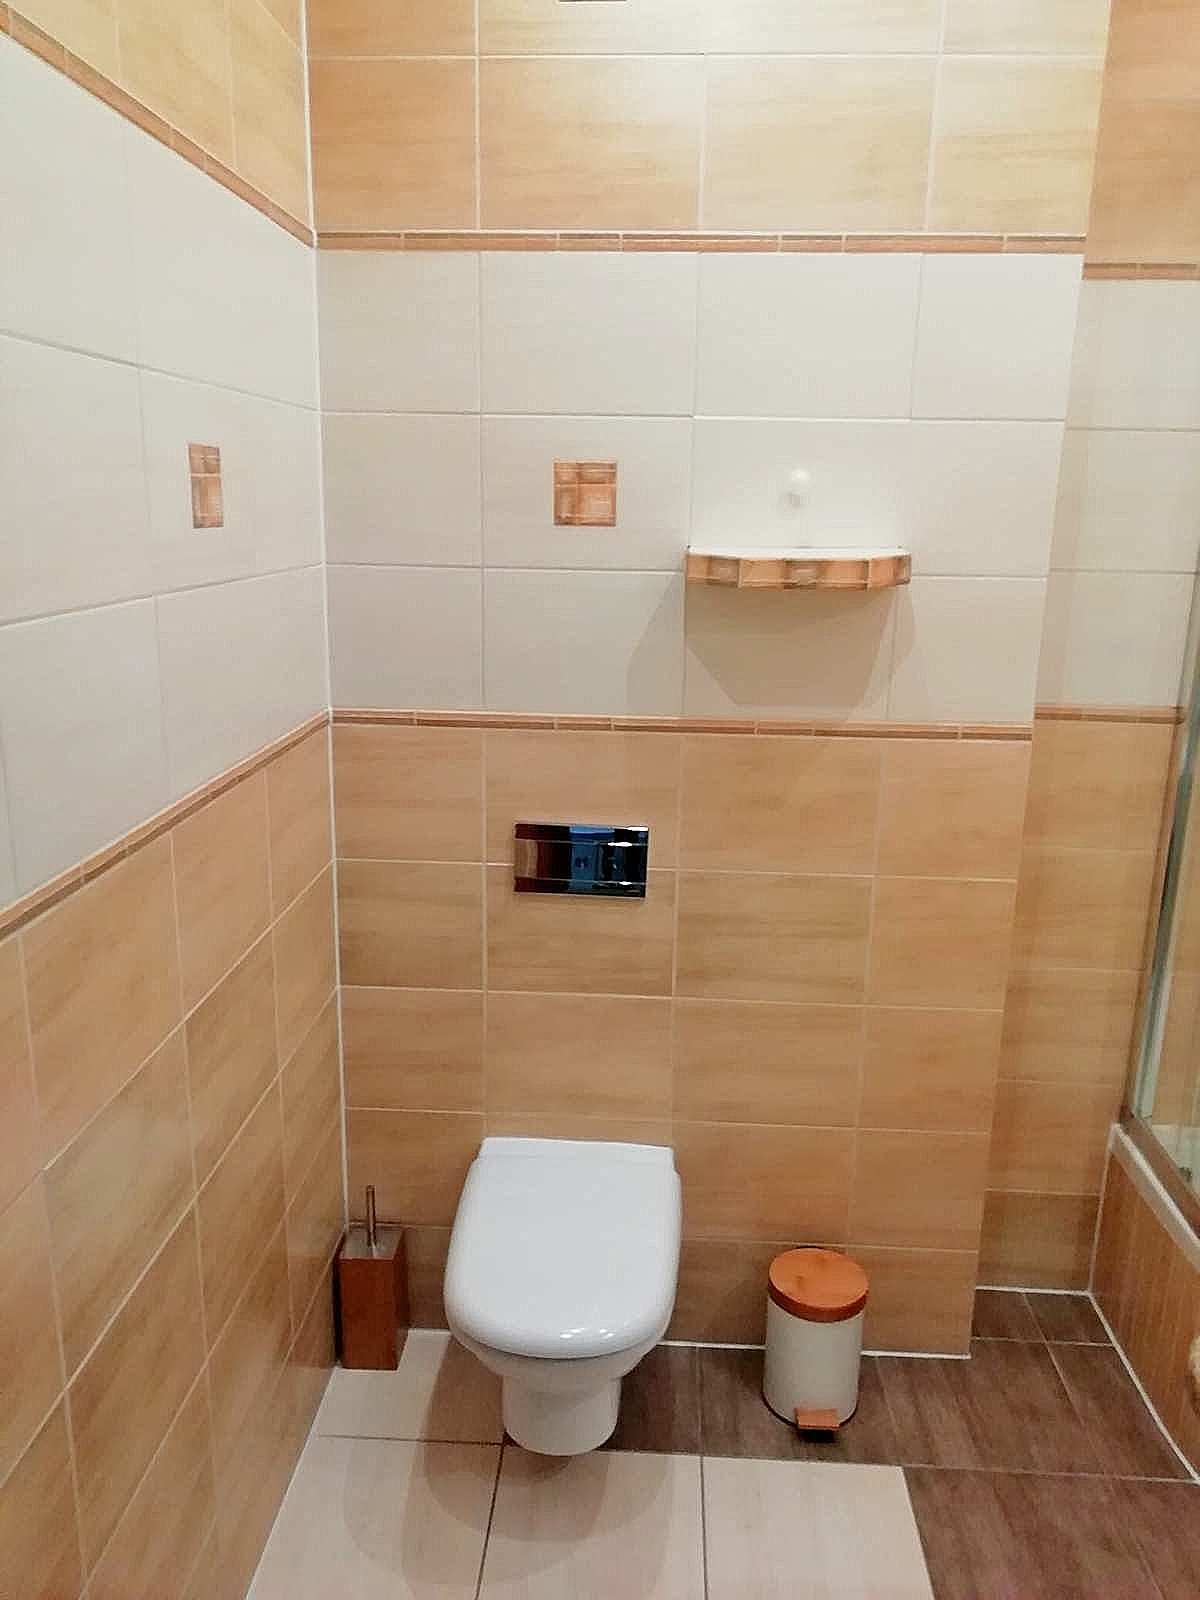 łazienka wc apartamentu fabryka endorfin w kłodzku/bathroom in apartment Fabryka Endorfin Klodzko